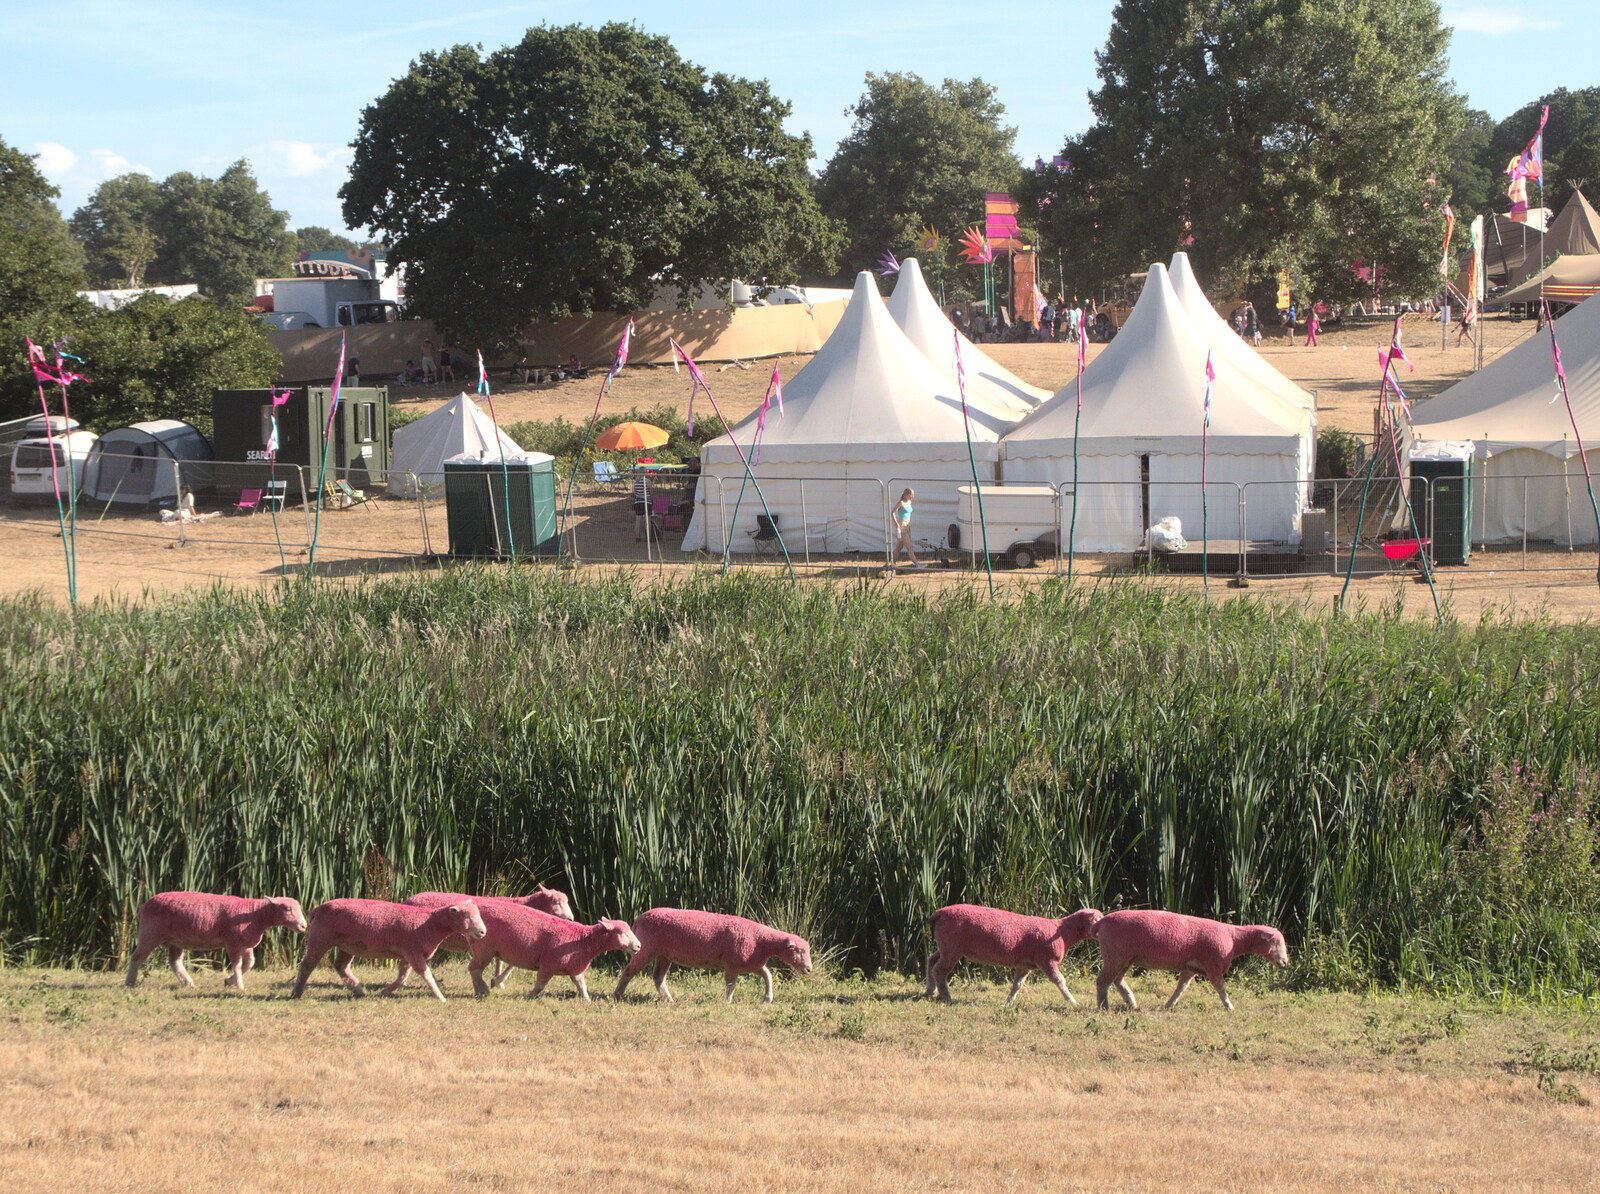 A Day at Latitude, Henham Park, Suffolk - 24th July 2022: The pink sheep wander off